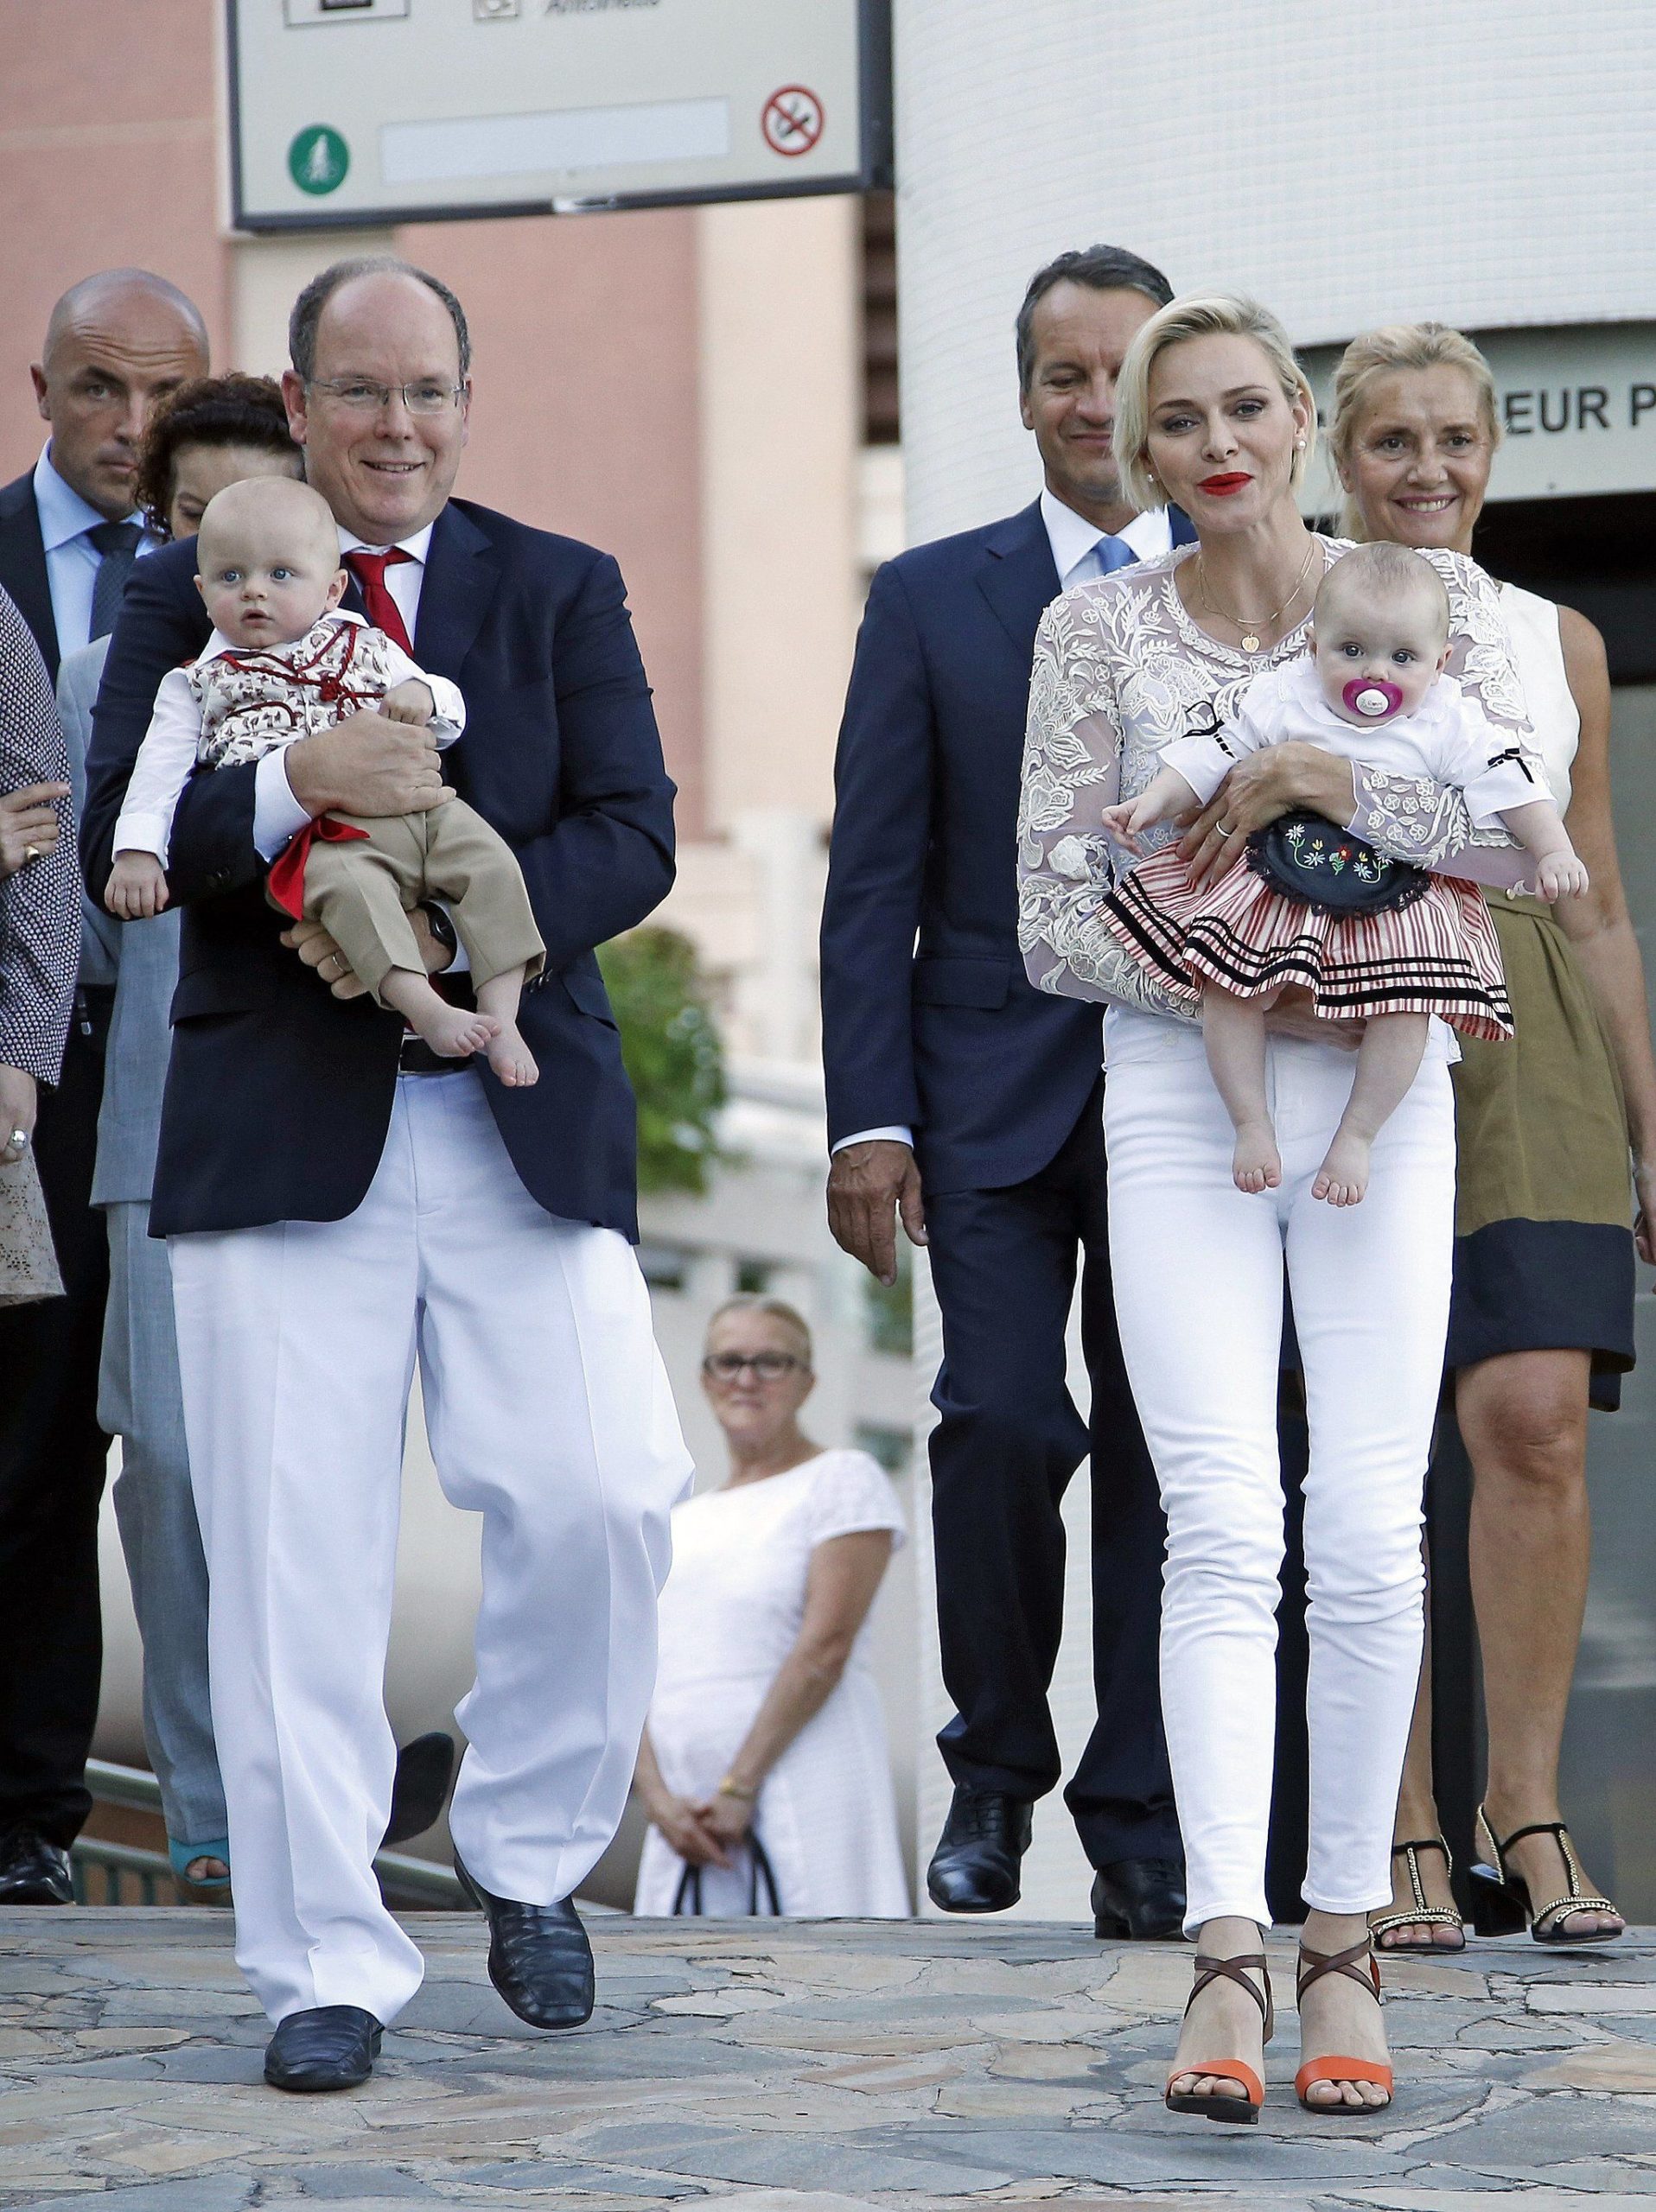 Monaco Princess Charlene And prince Albert Split Demanding Her $500M In Divorce?